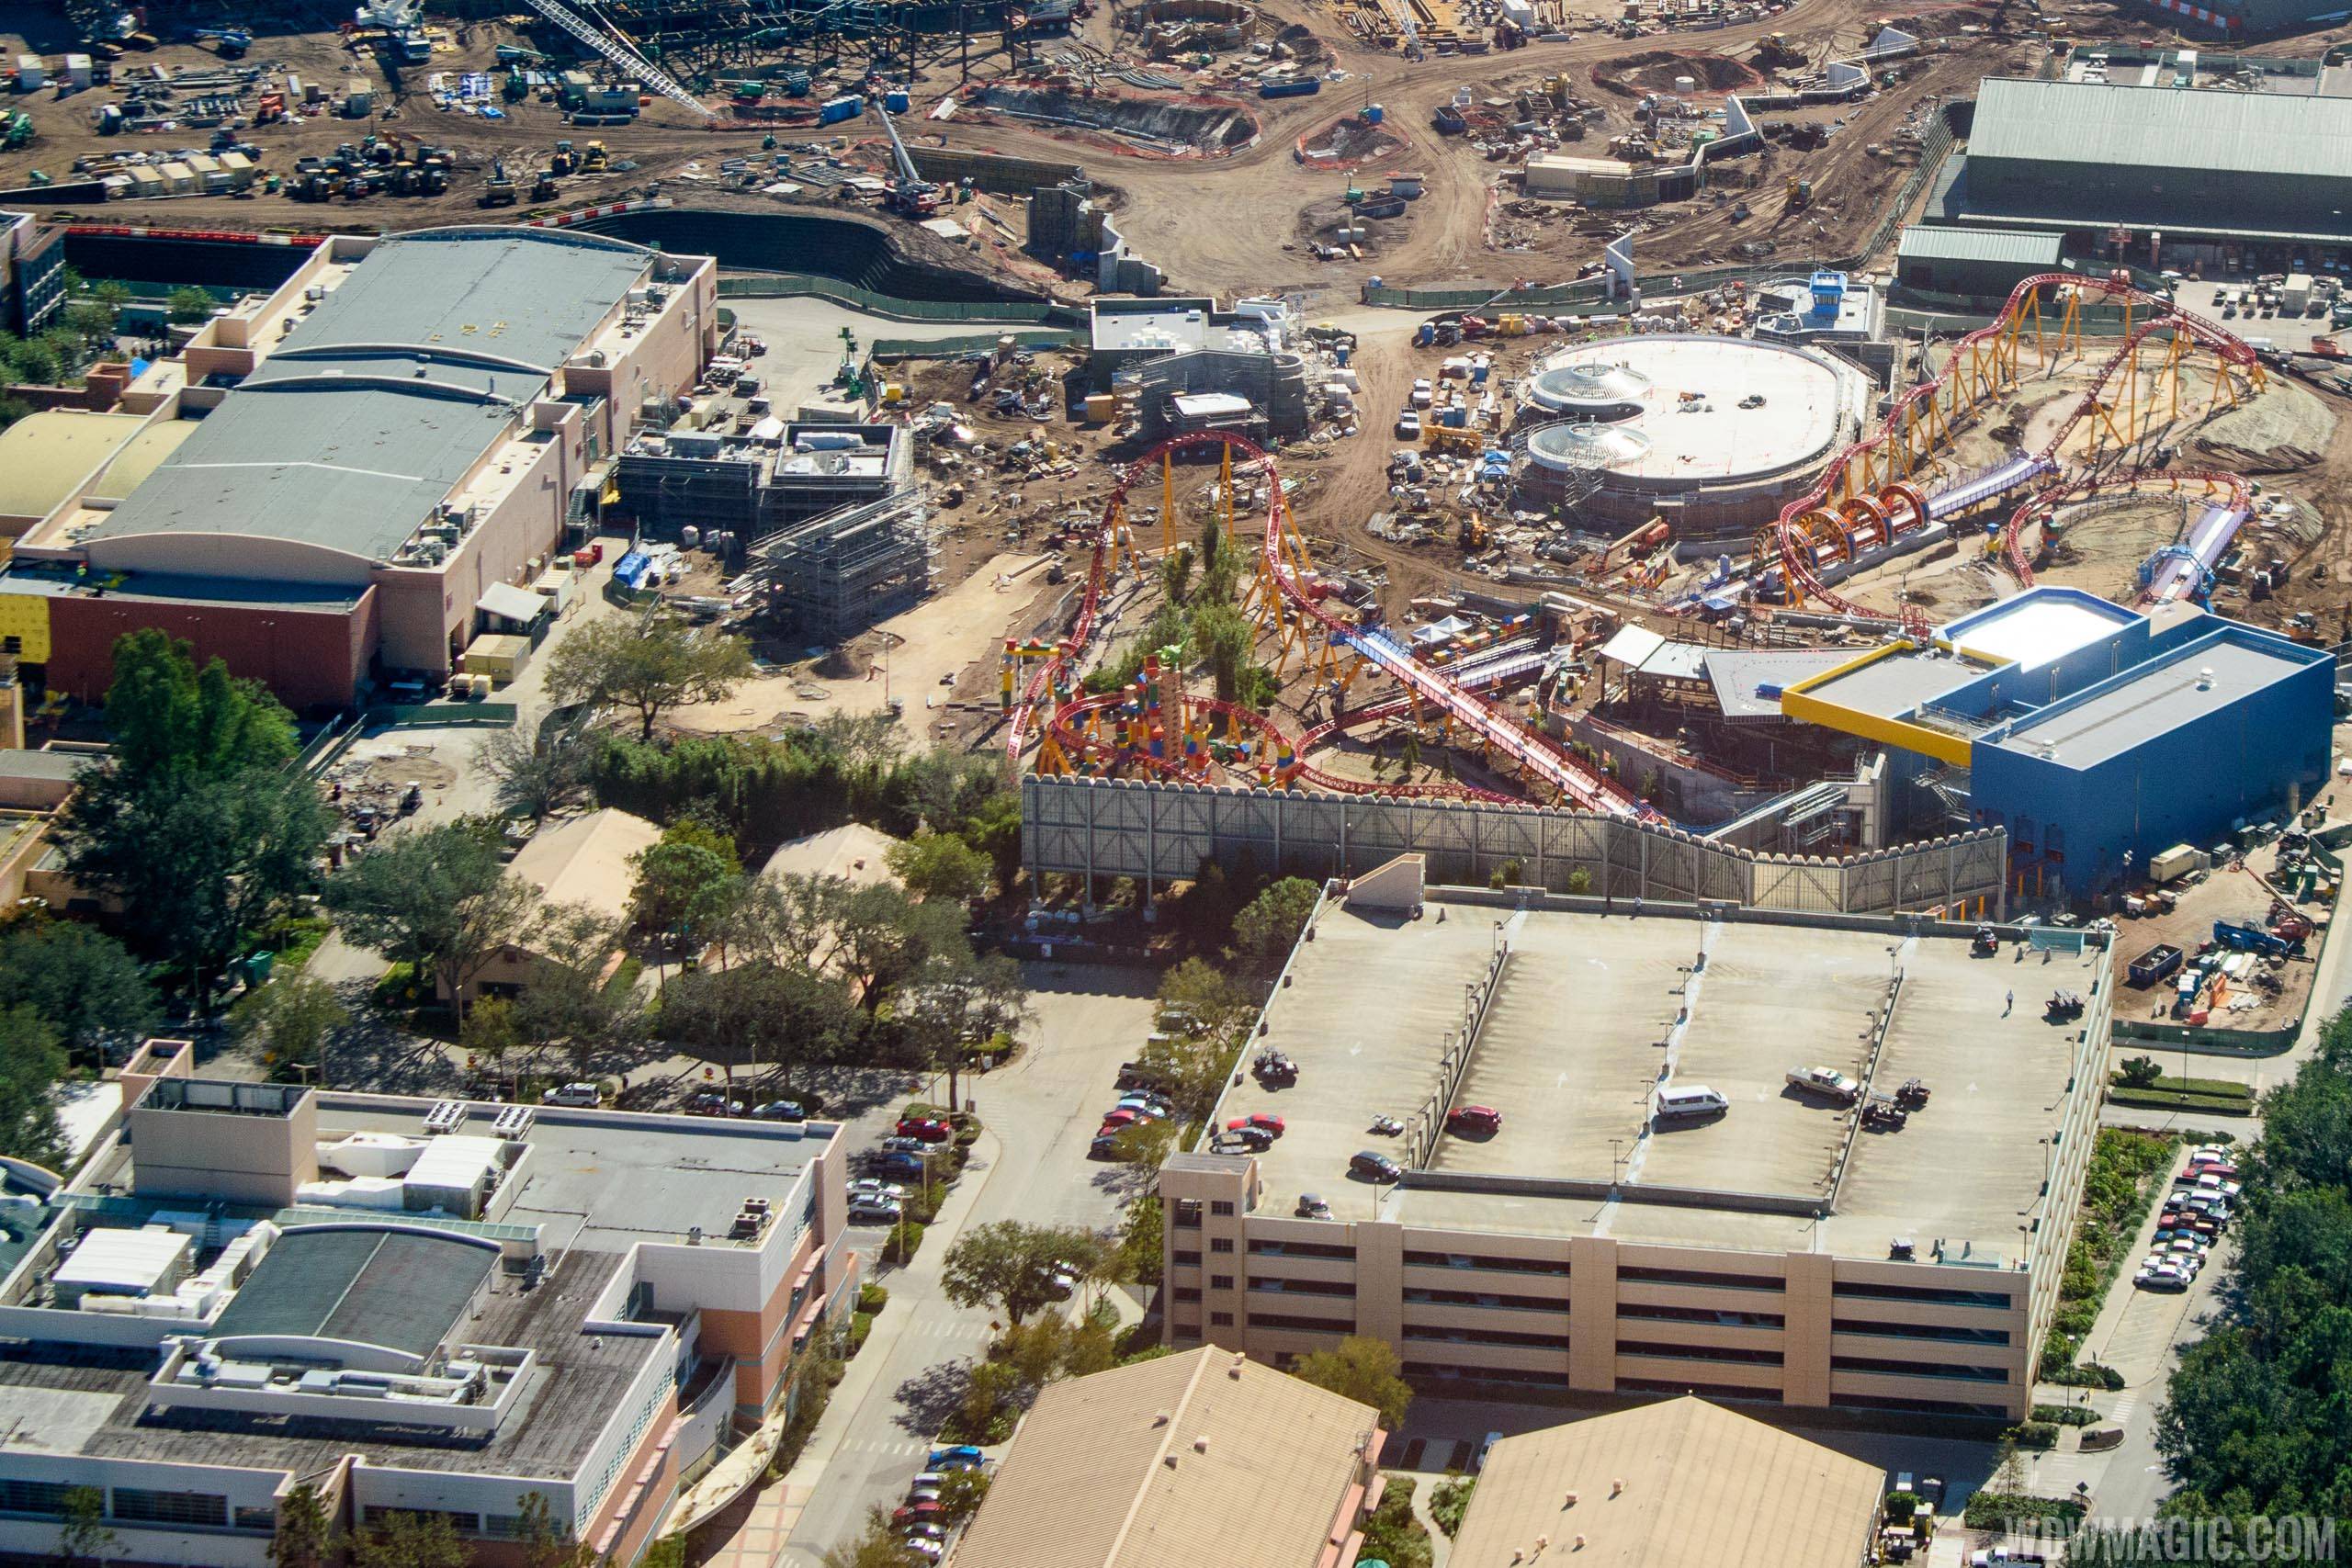 PHOTOS - Toy Story Land construction at Disney's Hollywood Studios